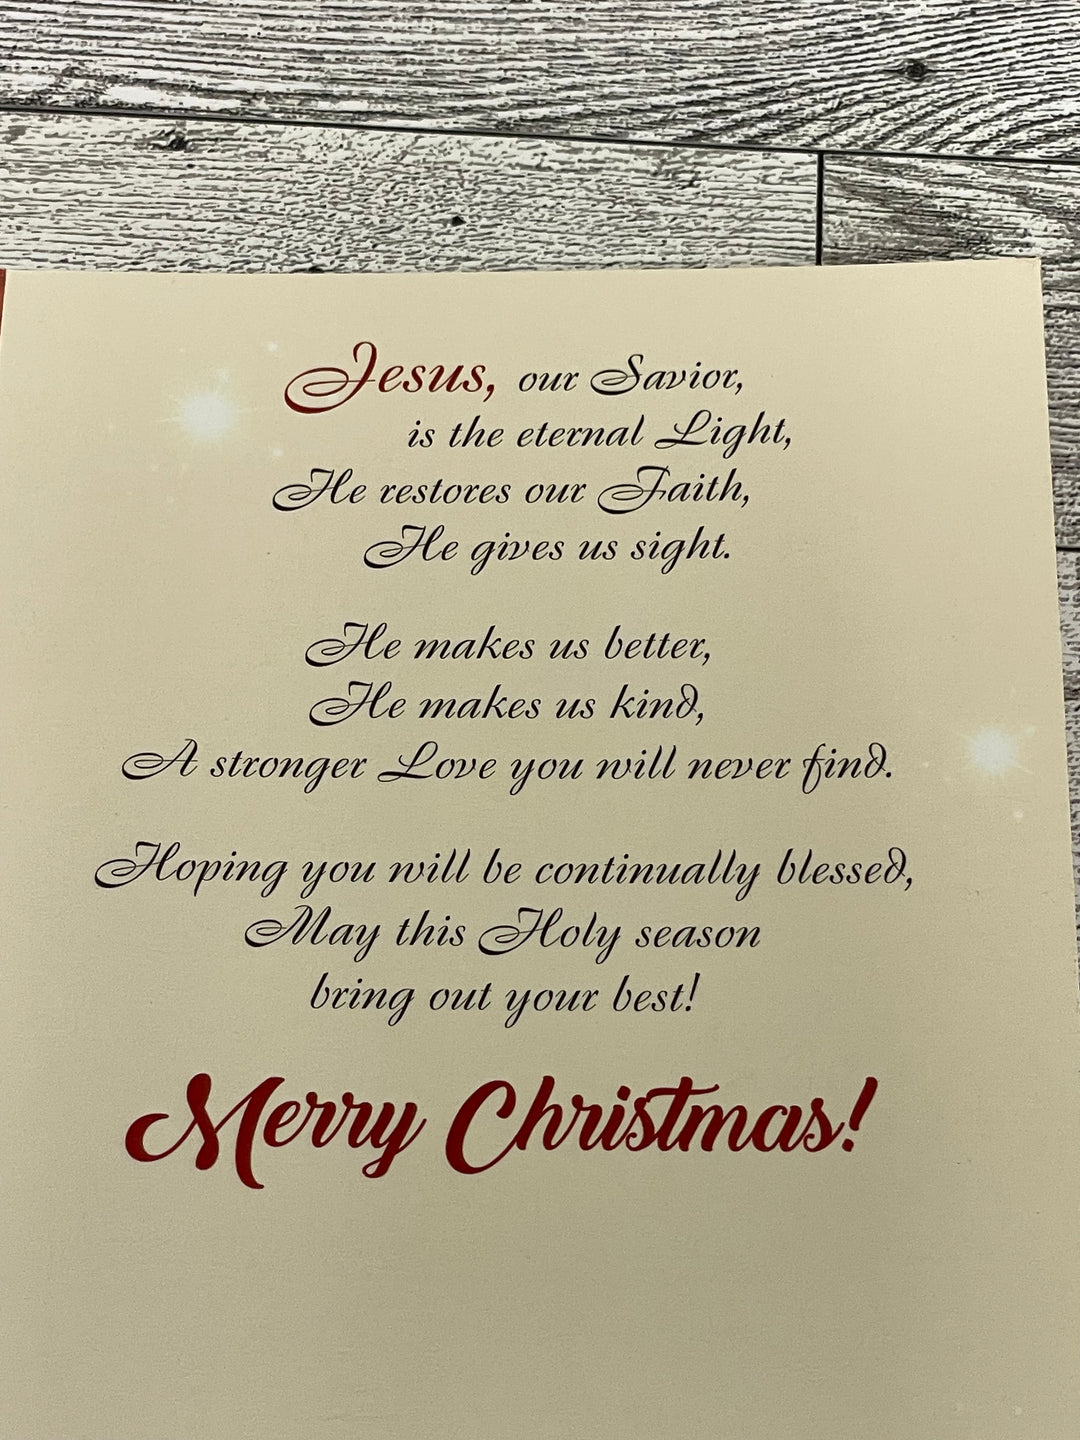 His Light Shines: African American Christmas Card Box Set (Inside)